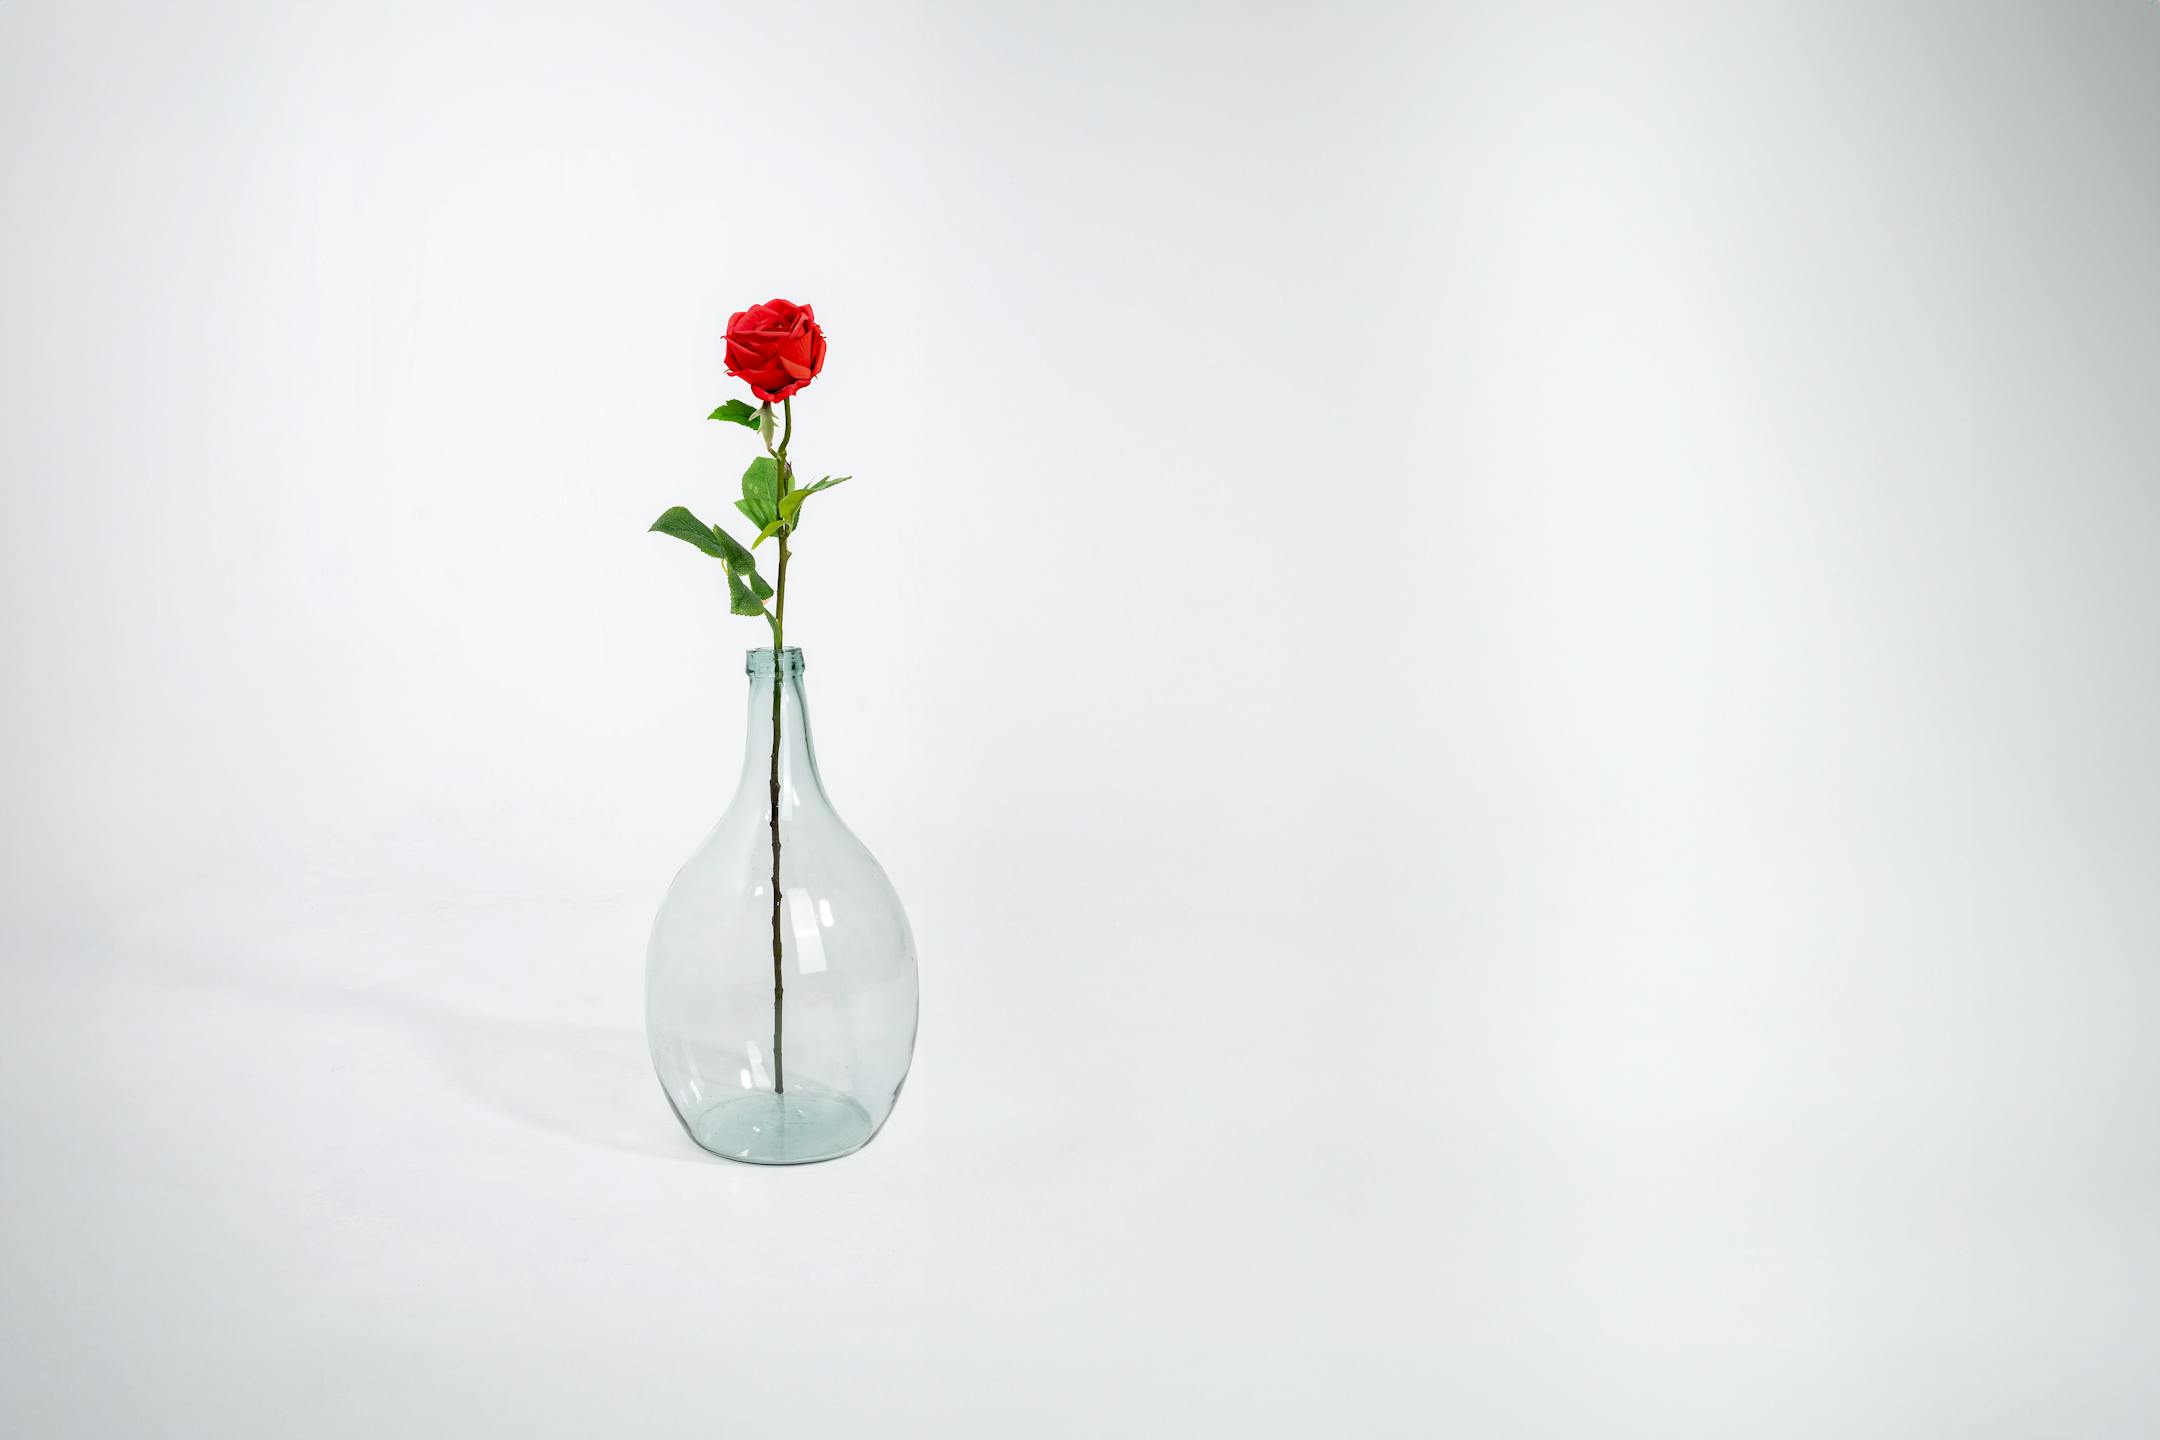 Red artificial rose stem in glass vase